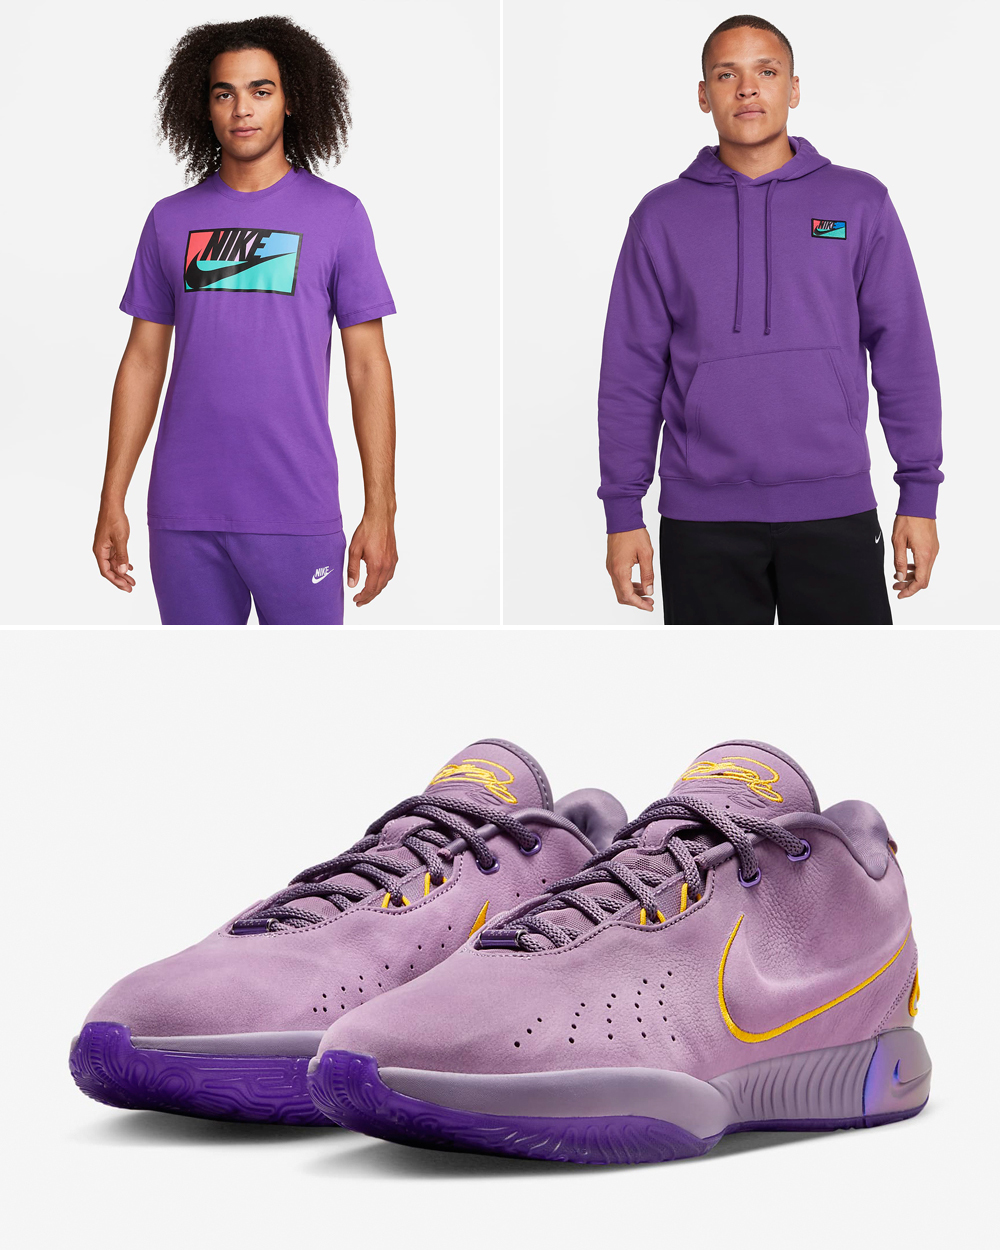 Nike-LeBron-21-Purple-Rain-Clothing